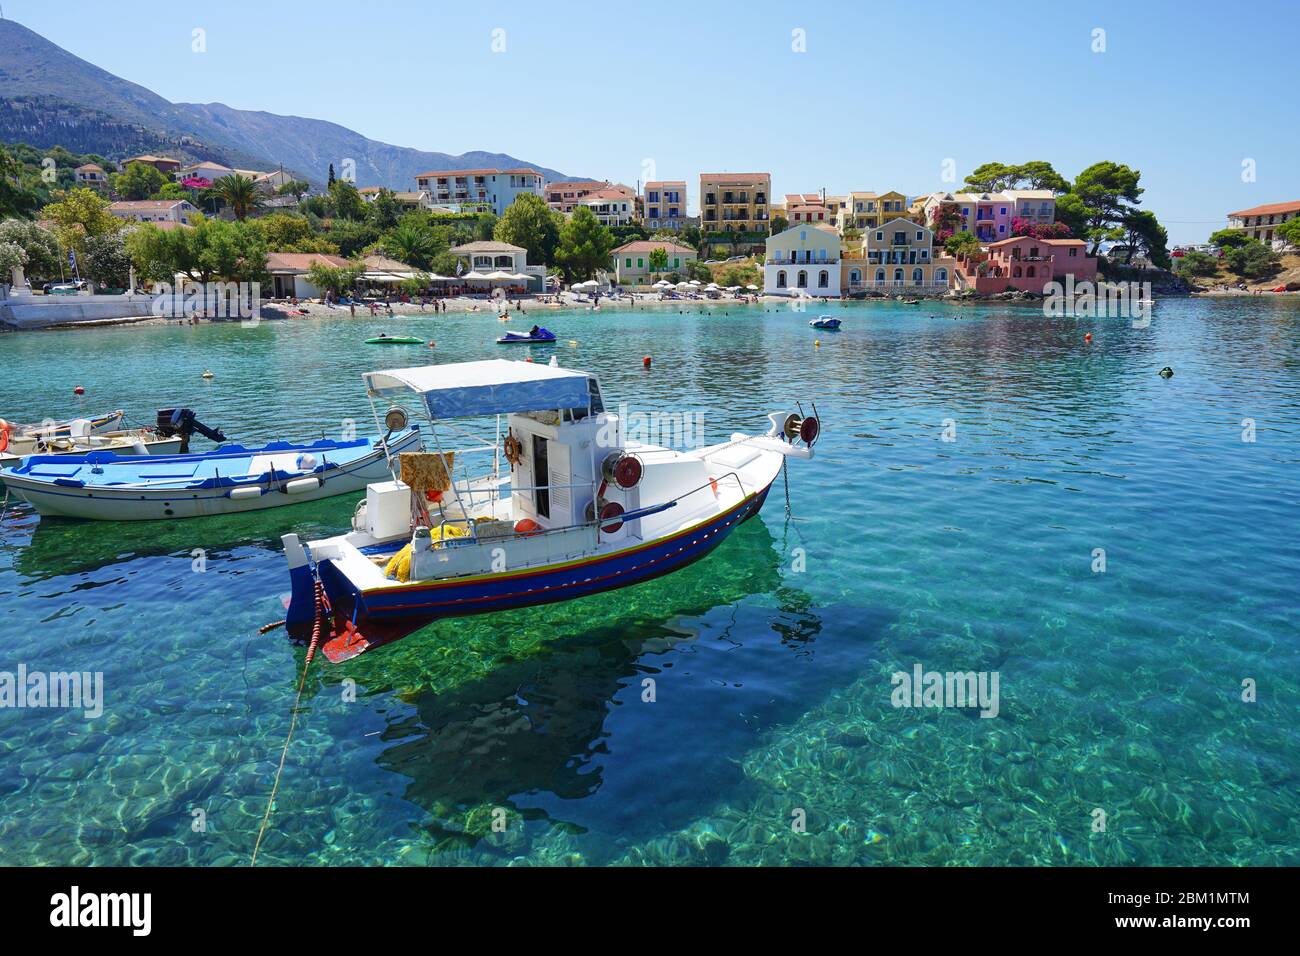 Asos village panorama and blue sea on a sunny day, Kefalonia (Cephalonia) Island, Ionian Sea, Mediterranean, Greece Stock Photo